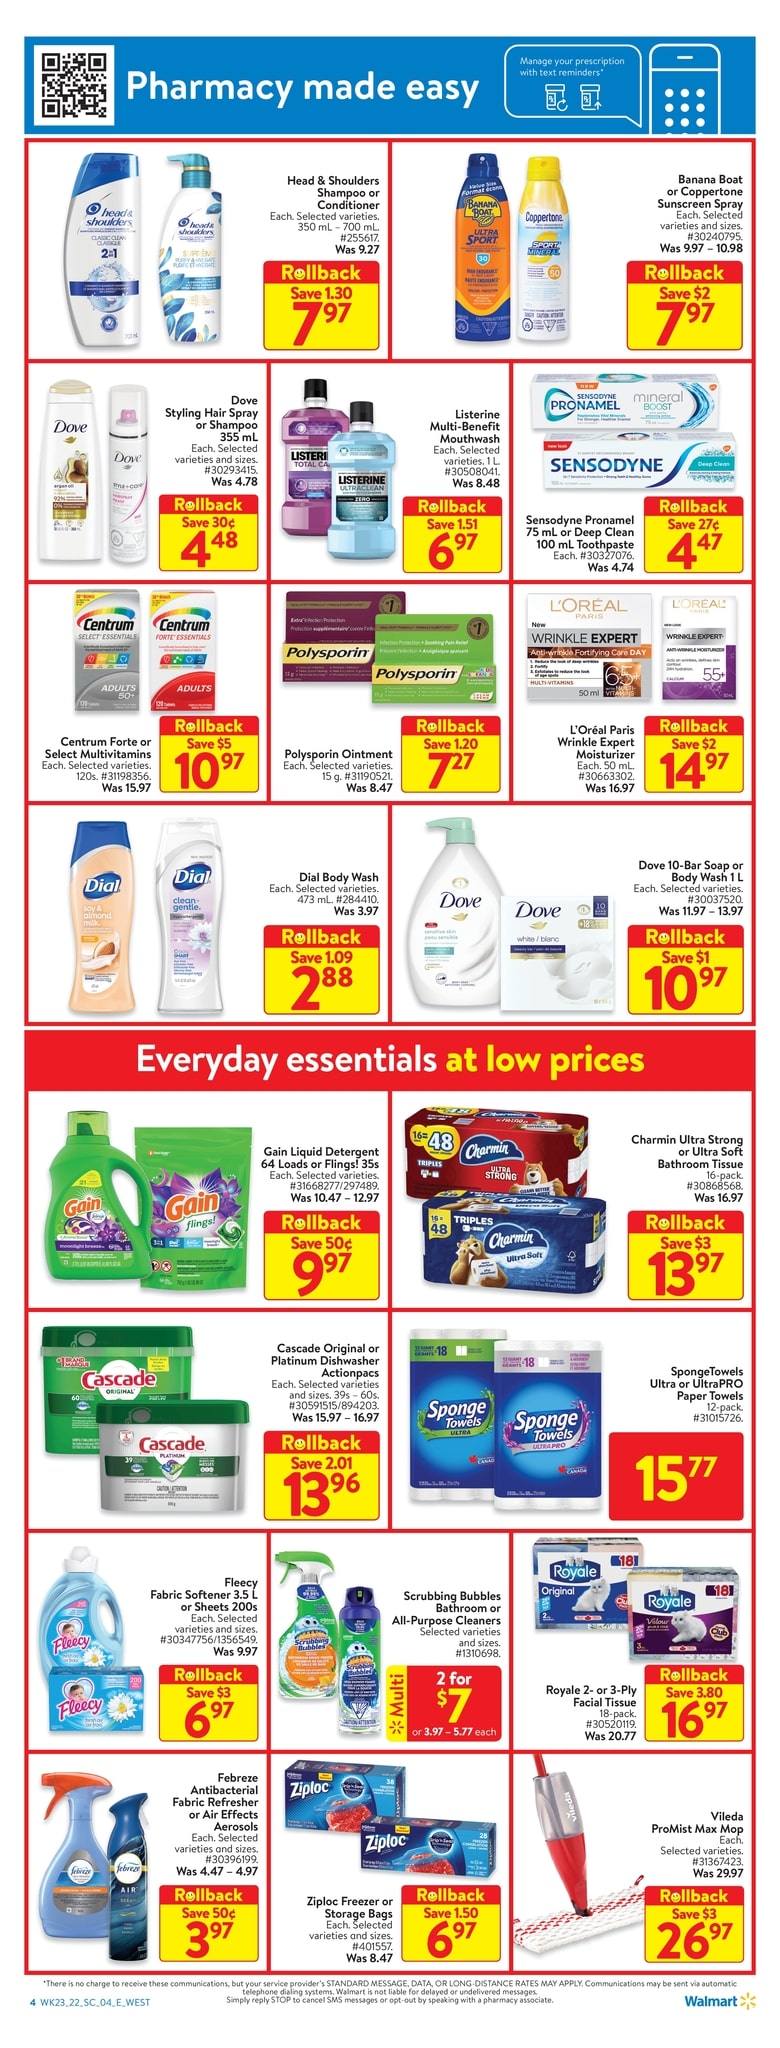 Walmart - Weekly Flyer Specials - Page 6